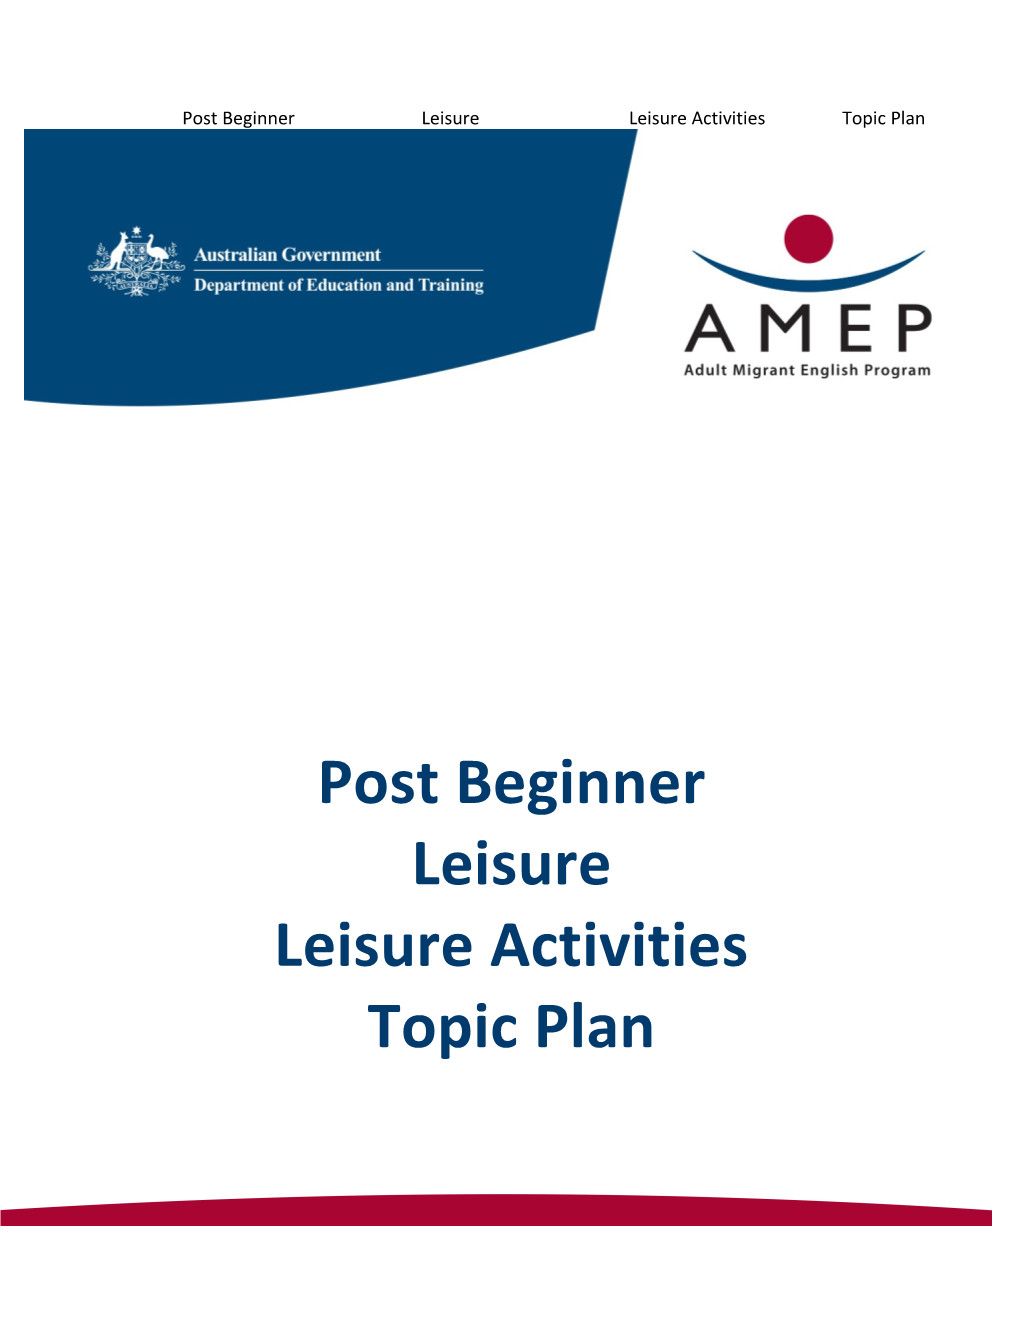 Post Beginner Leisure Leisure Activities Topic Plan